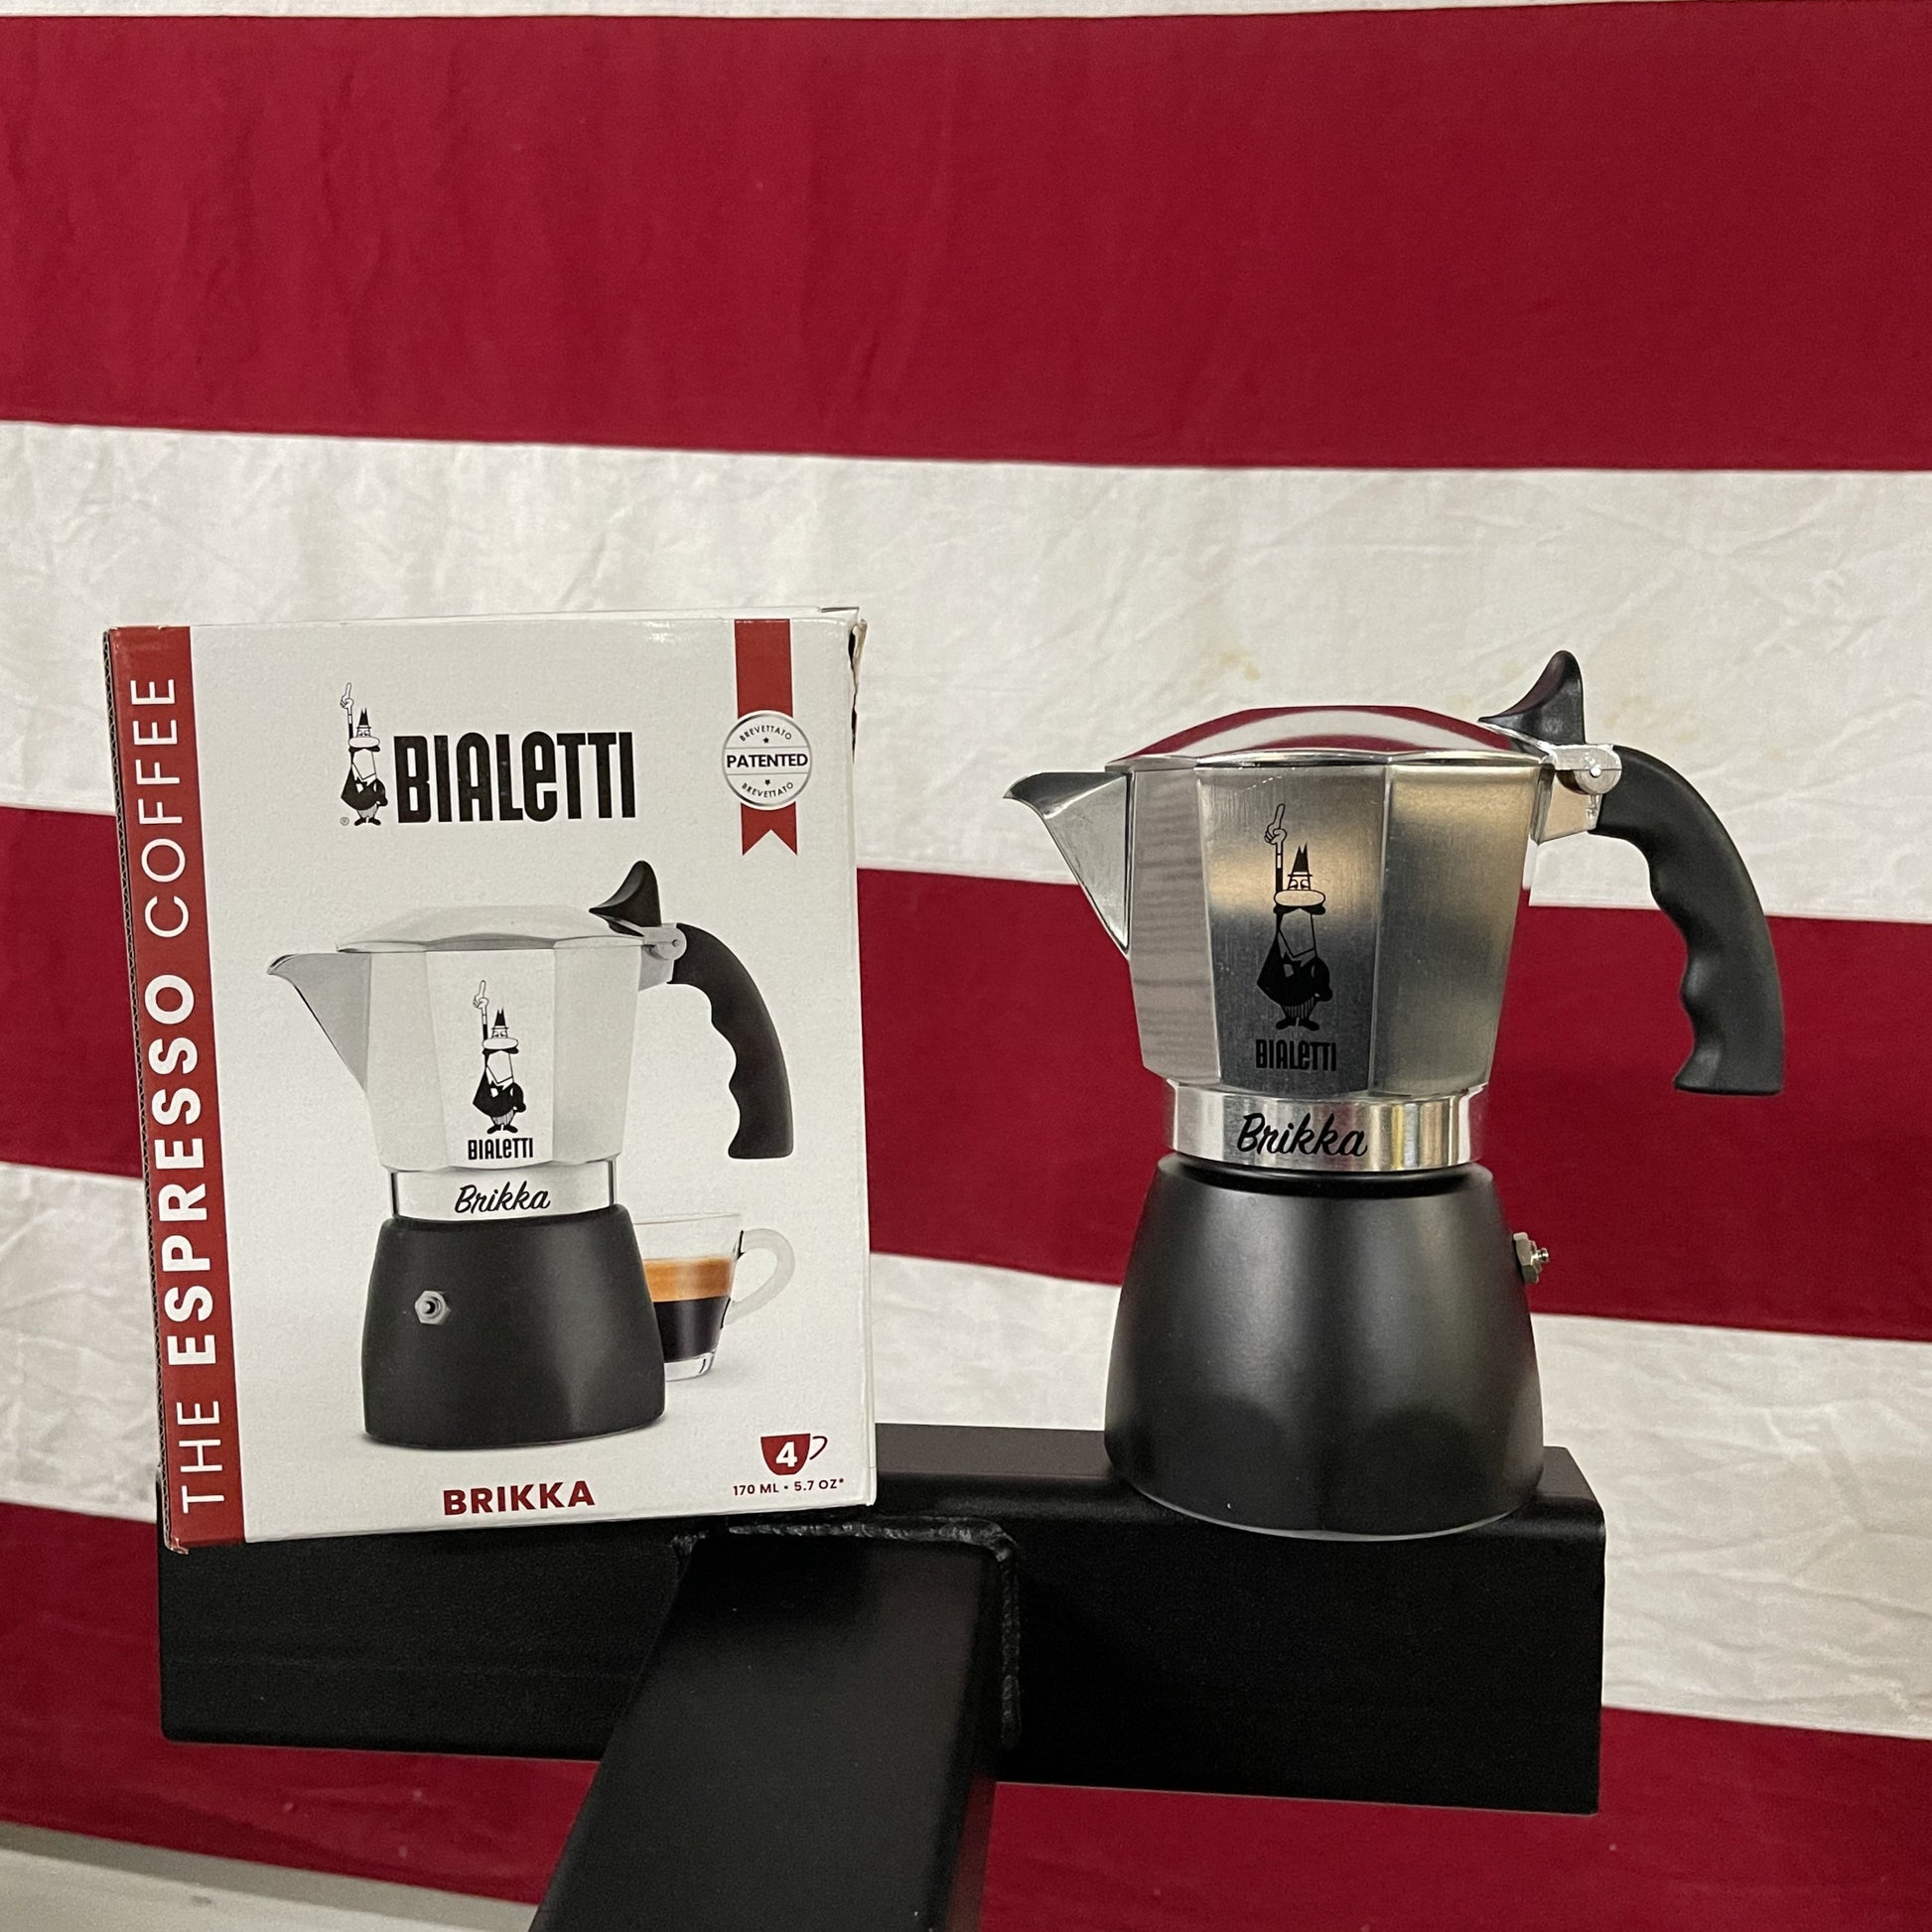 Mini express espresso maker - 2 cups 1 Unit Bialetti